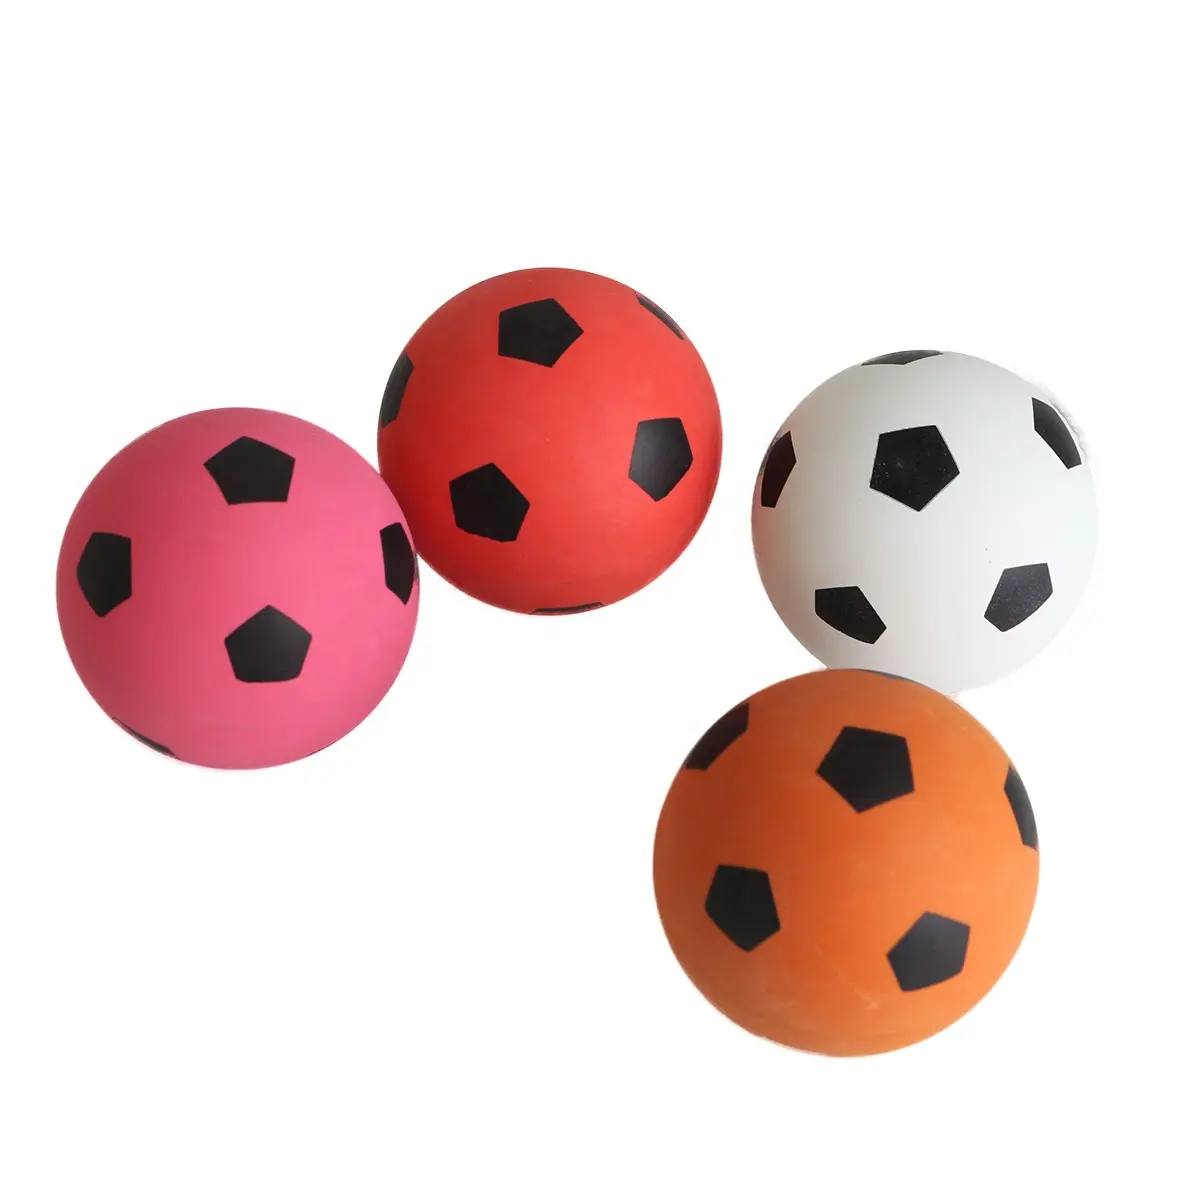 Hohl gummi Bounce Balls 60mm Bounce Squash Ball, Mini-Basketball, Fußball, Beach Ball von Customs Promotion